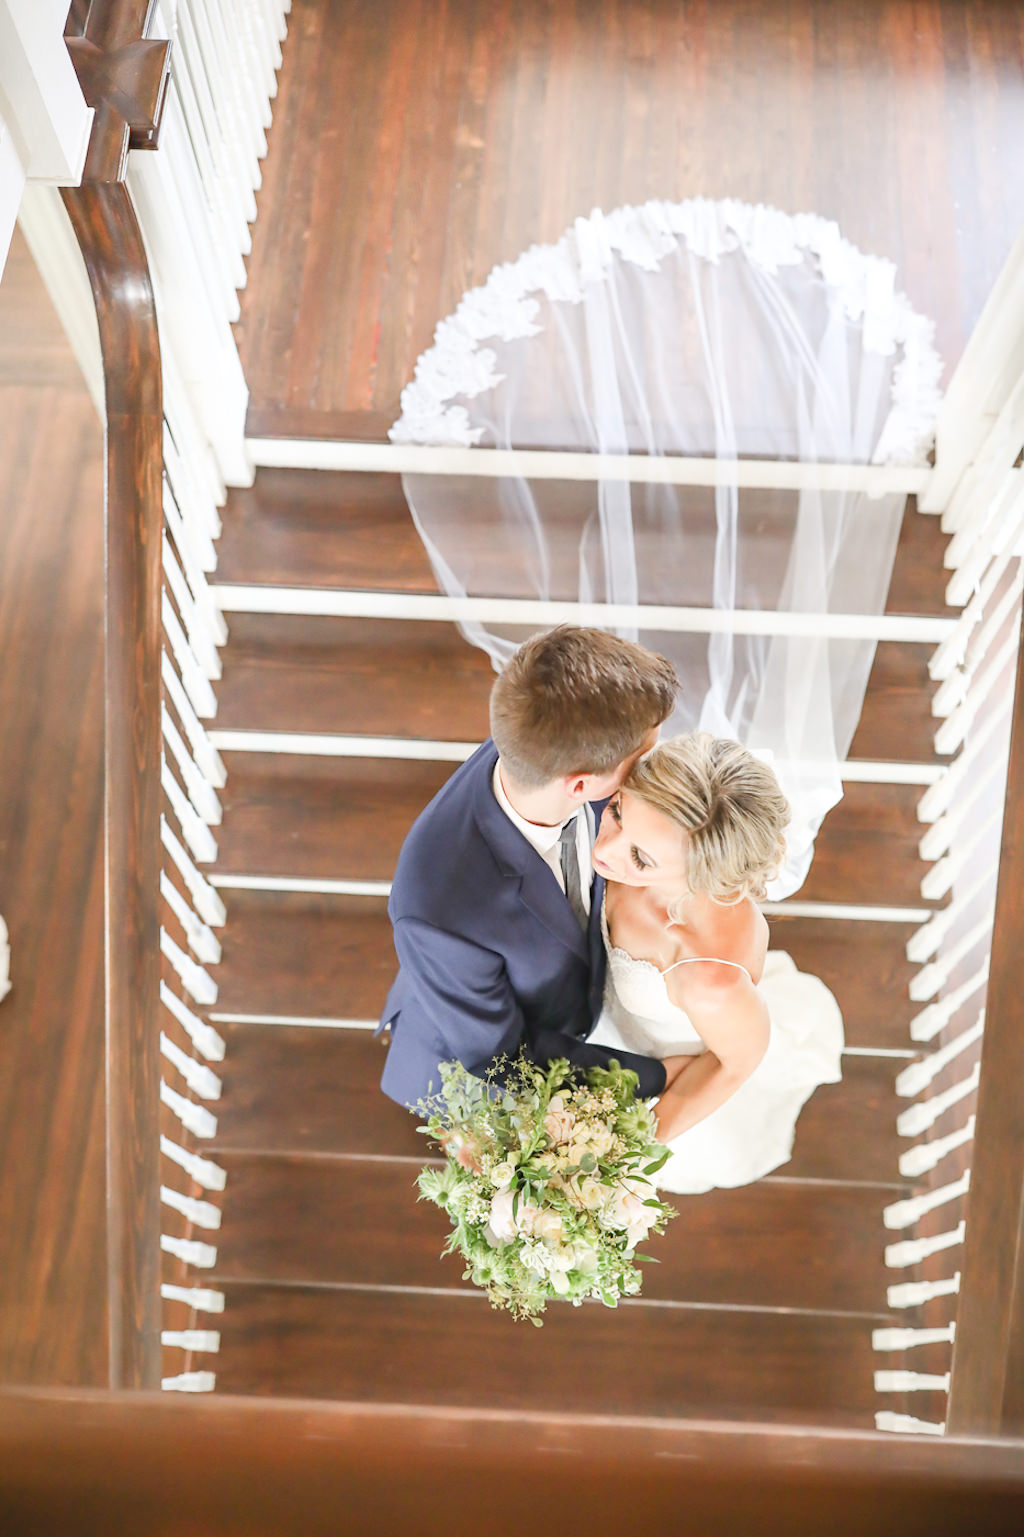 Florida Bride and Groom Unique Creative Wedding Portrait on Staircase | Tampa Bay Wedding Photographer Lifelong Photography Studio